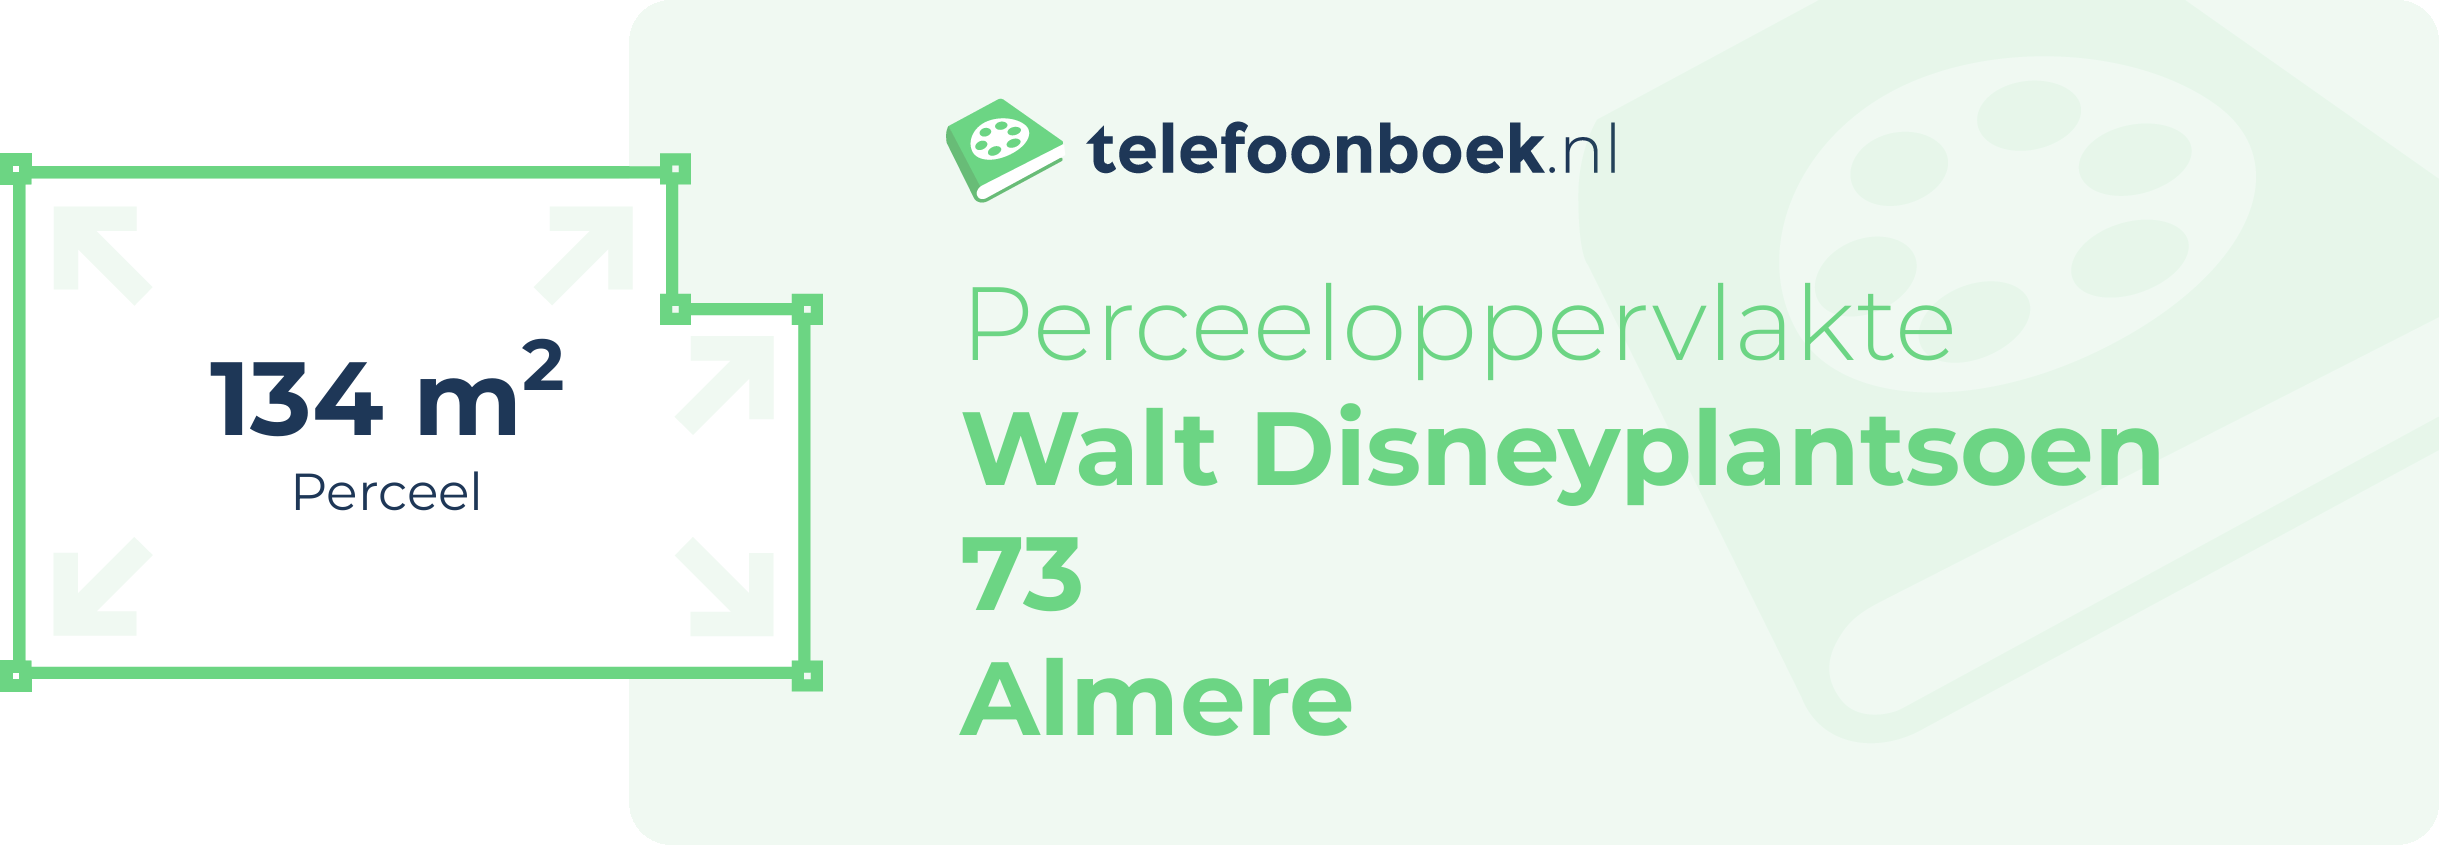 Perceeloppervlakte Walt Disneyplantsoen 73 Almere